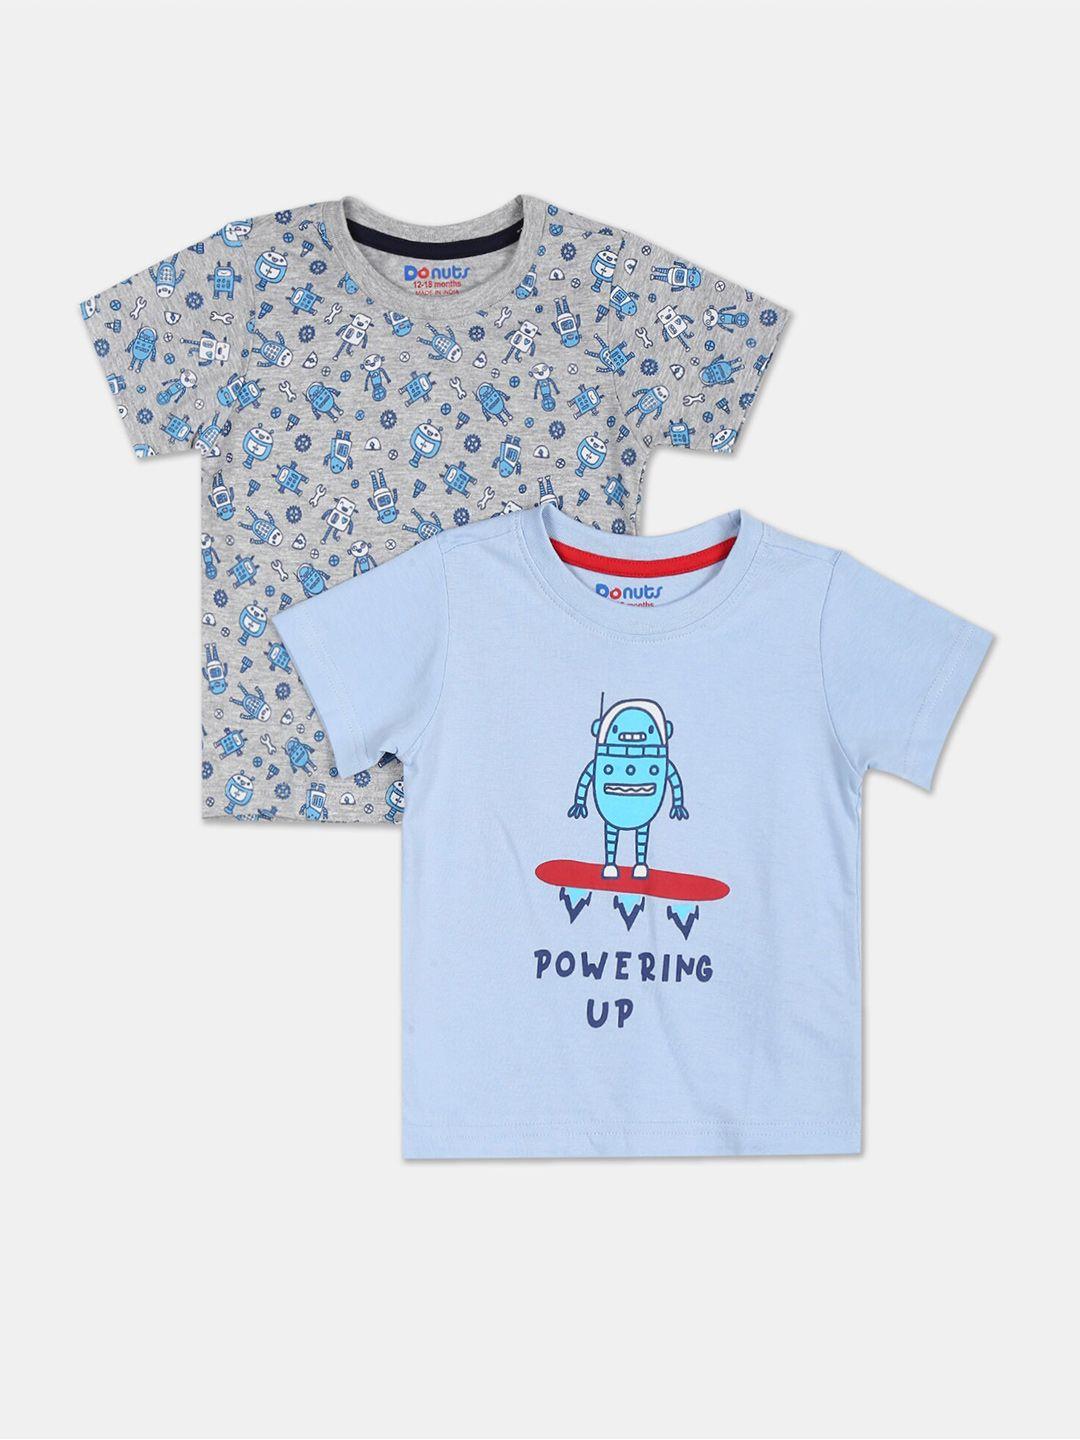 donuts-boys-grey-&-blue-2-printed-t-shirts